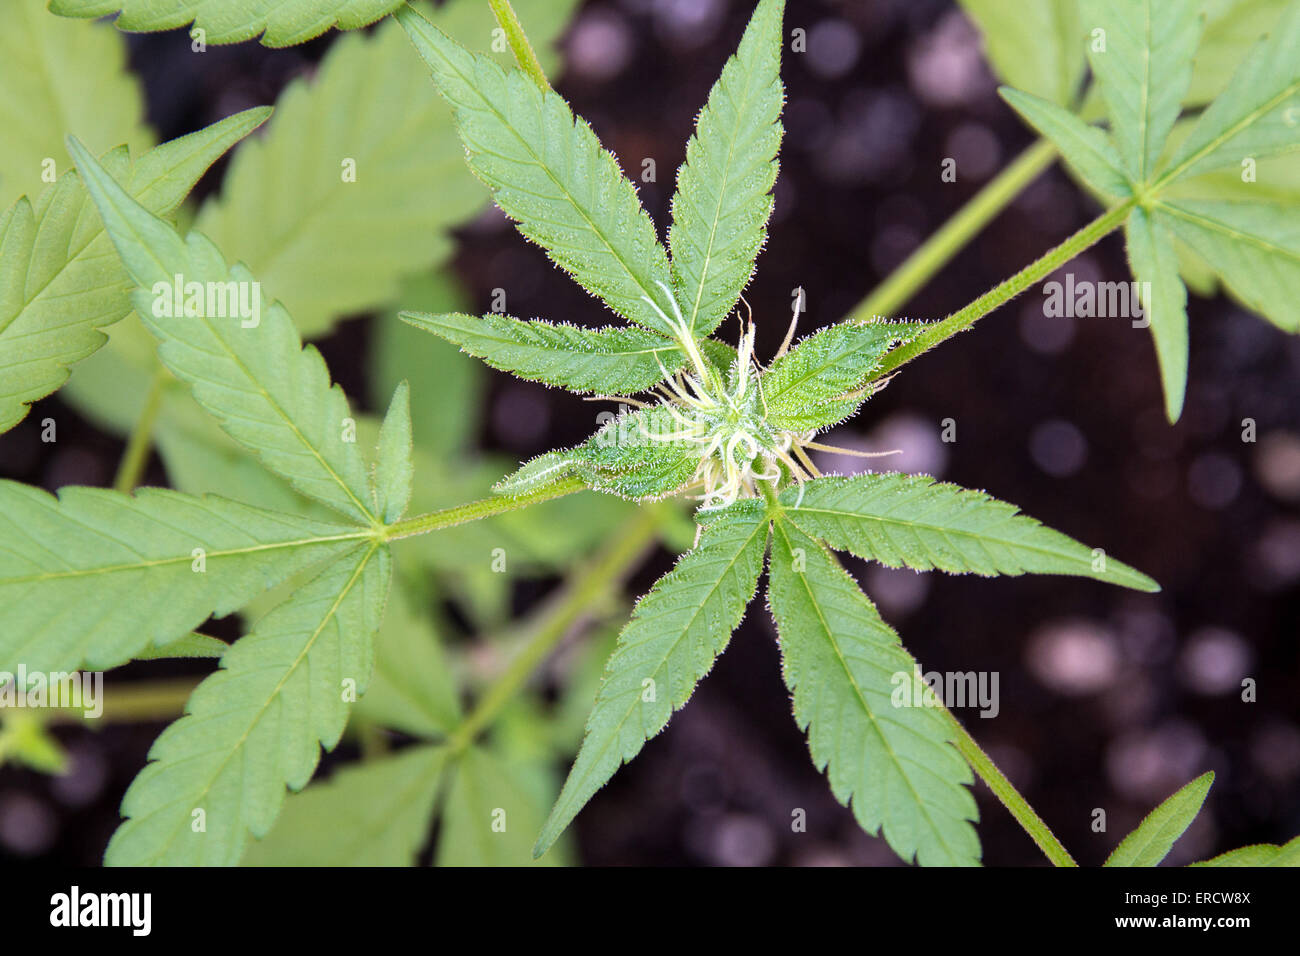 medical marijuana plant also called cannabis bud closeup Stock Photo